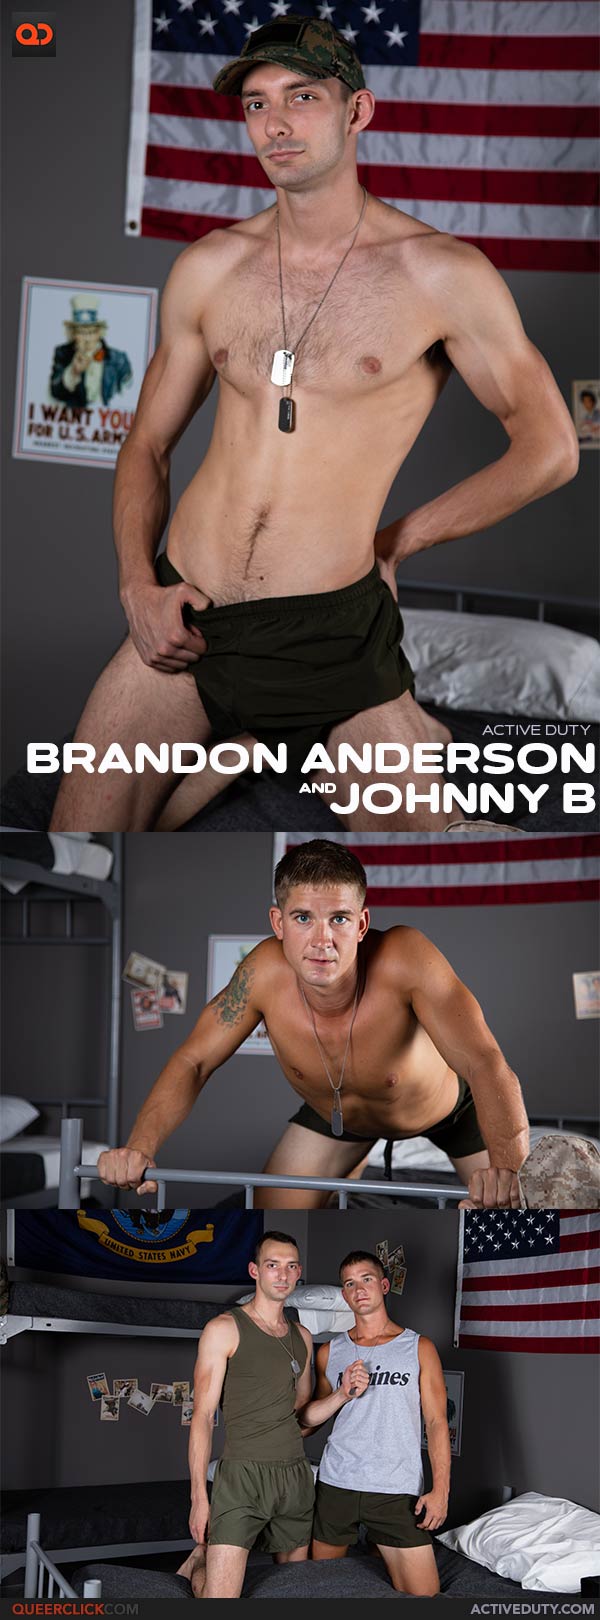 Active Duty: Johnny B. Dominates Brandon Anderson